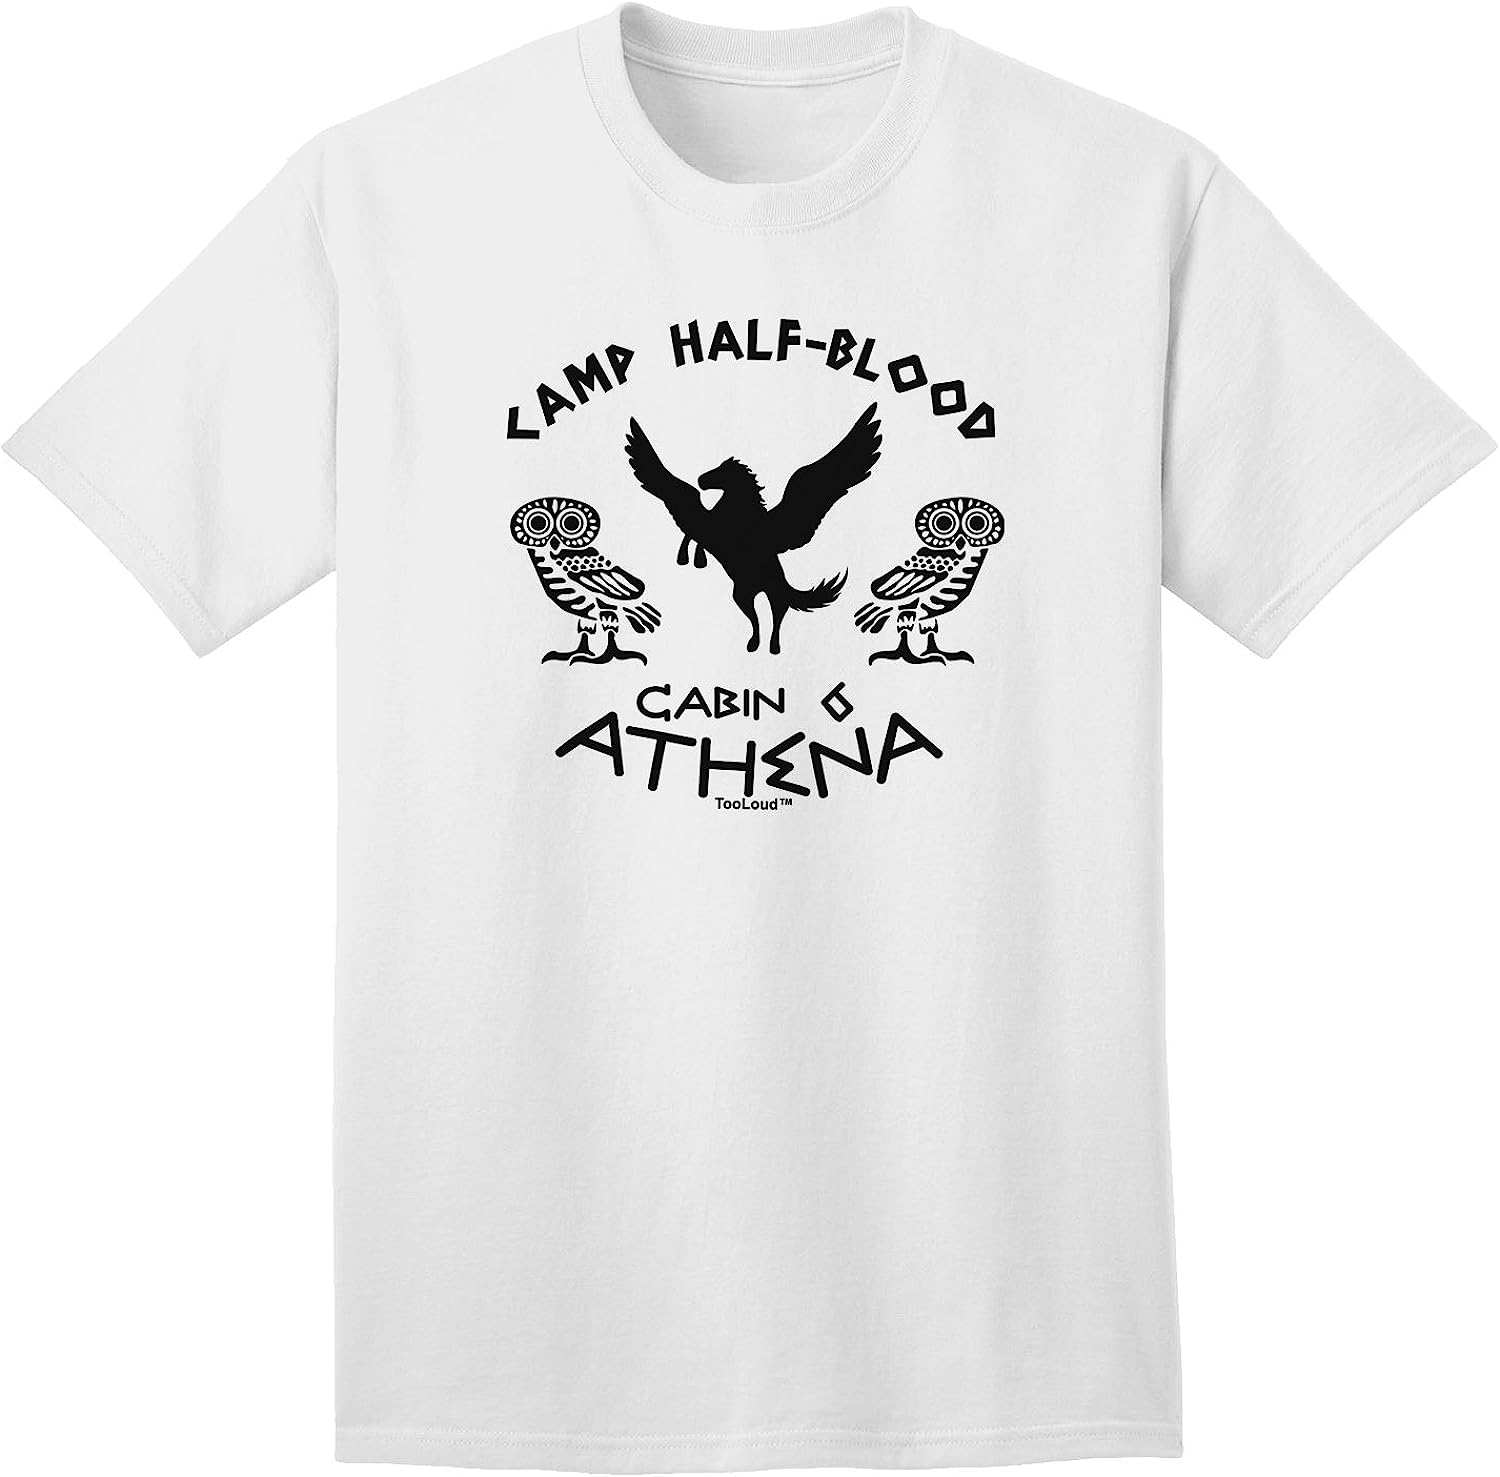 Camp Half-Blood All Cabins Unisex T-Shirt